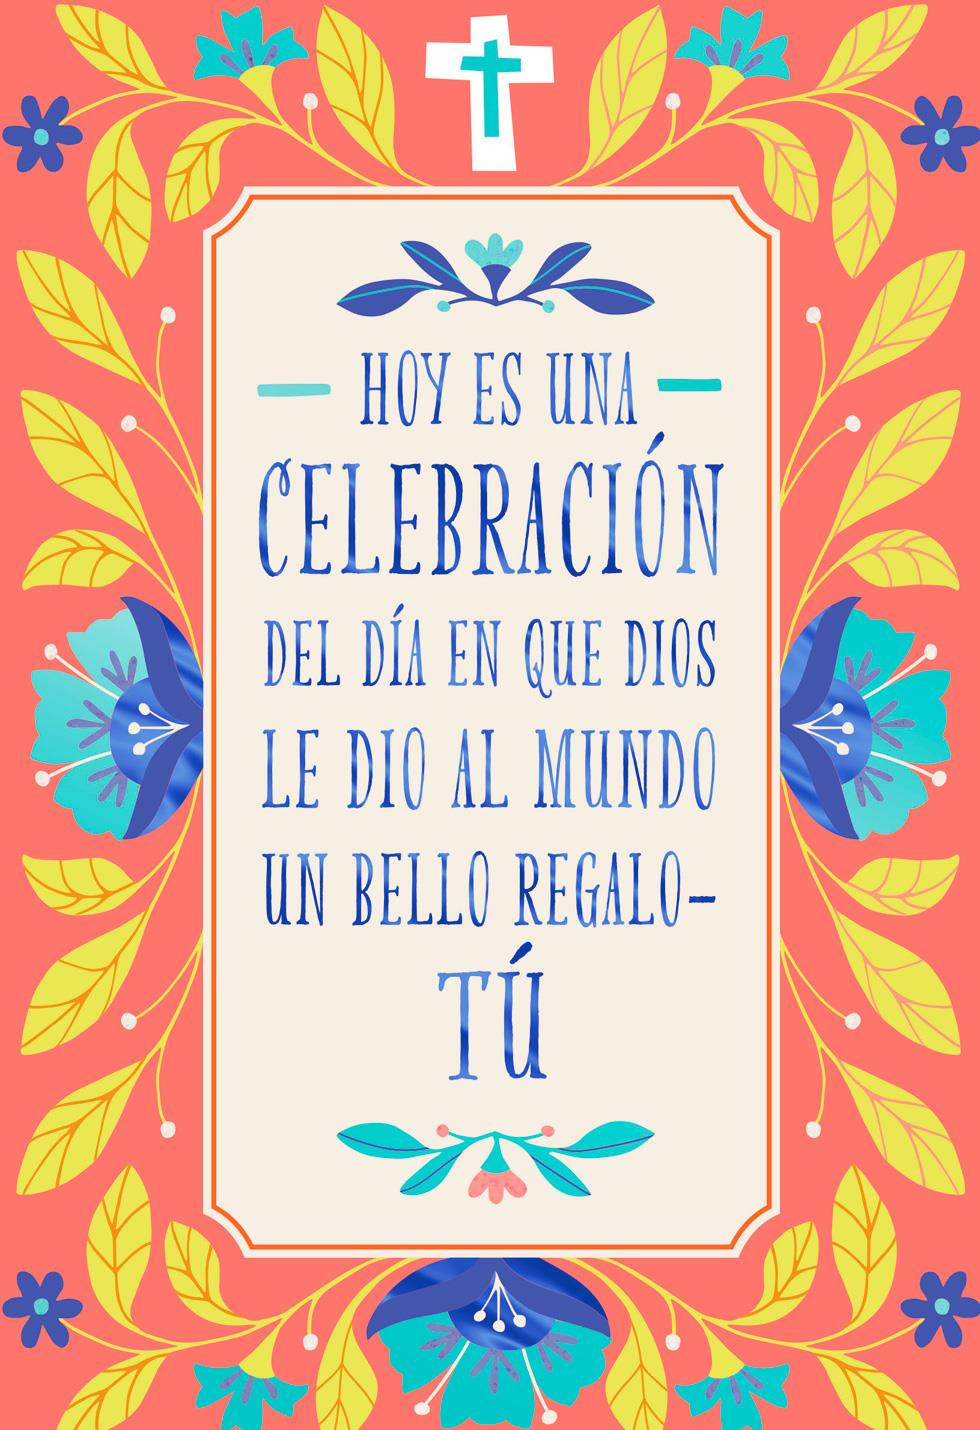 Birthday Wishes In Spanish
 A Wonderful Woman Spanish Language Religious Birthday Card